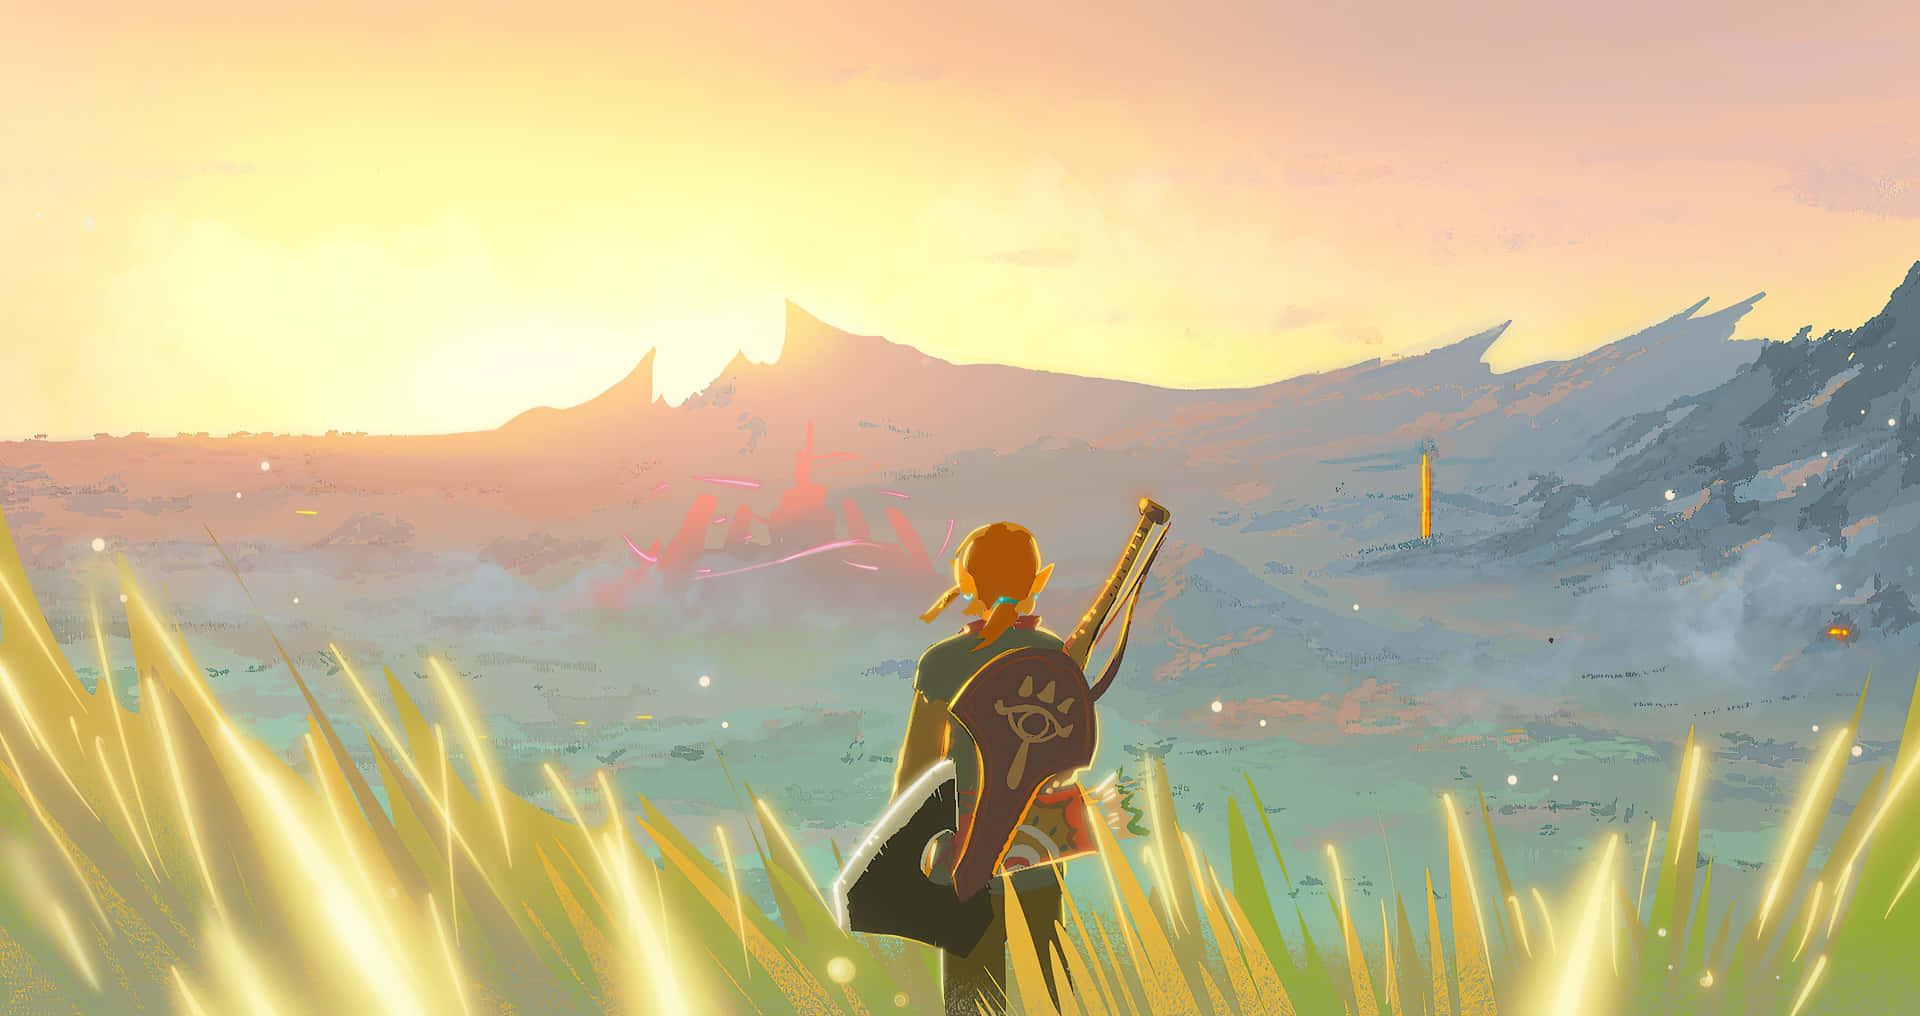 Explore the mystical world of Hyrule in Legend Of Zelda